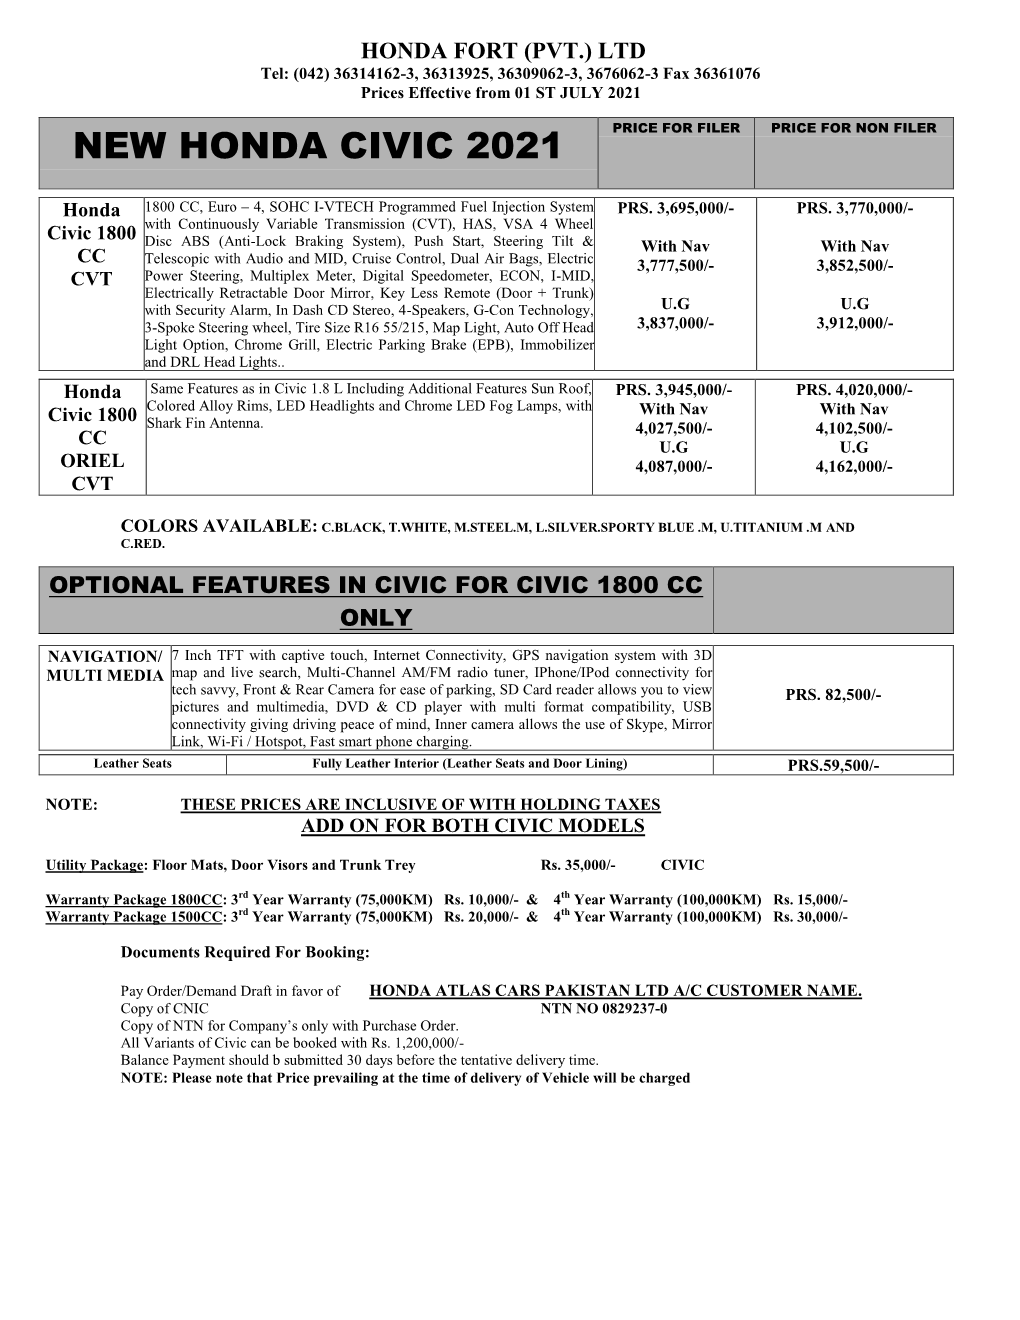 New Honda Civic 2021 Price for Filer